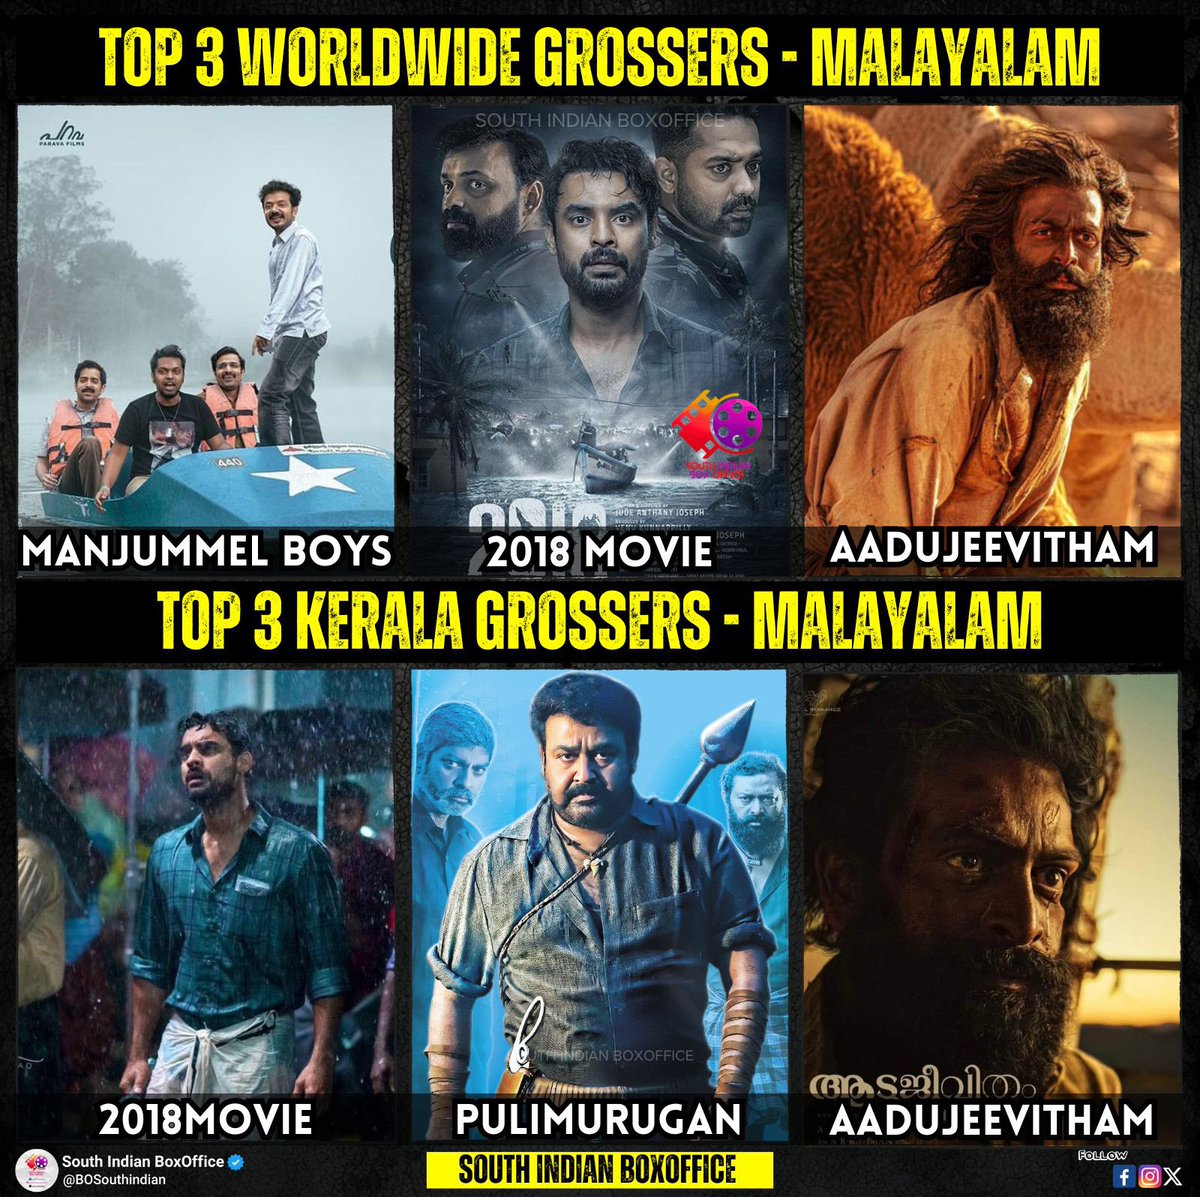 Top Worldwide Grossers Malayalam 

1. #ManjummelBoys 
2. #2018Movie 
3. #Aadujeevitham 

Top Kerala Grossers Malayalam 

1. #2018Movie 
2. #Pulimurugan 
3. #AaduJeevitham 

#Aavesham Will Change this Order Soon !!